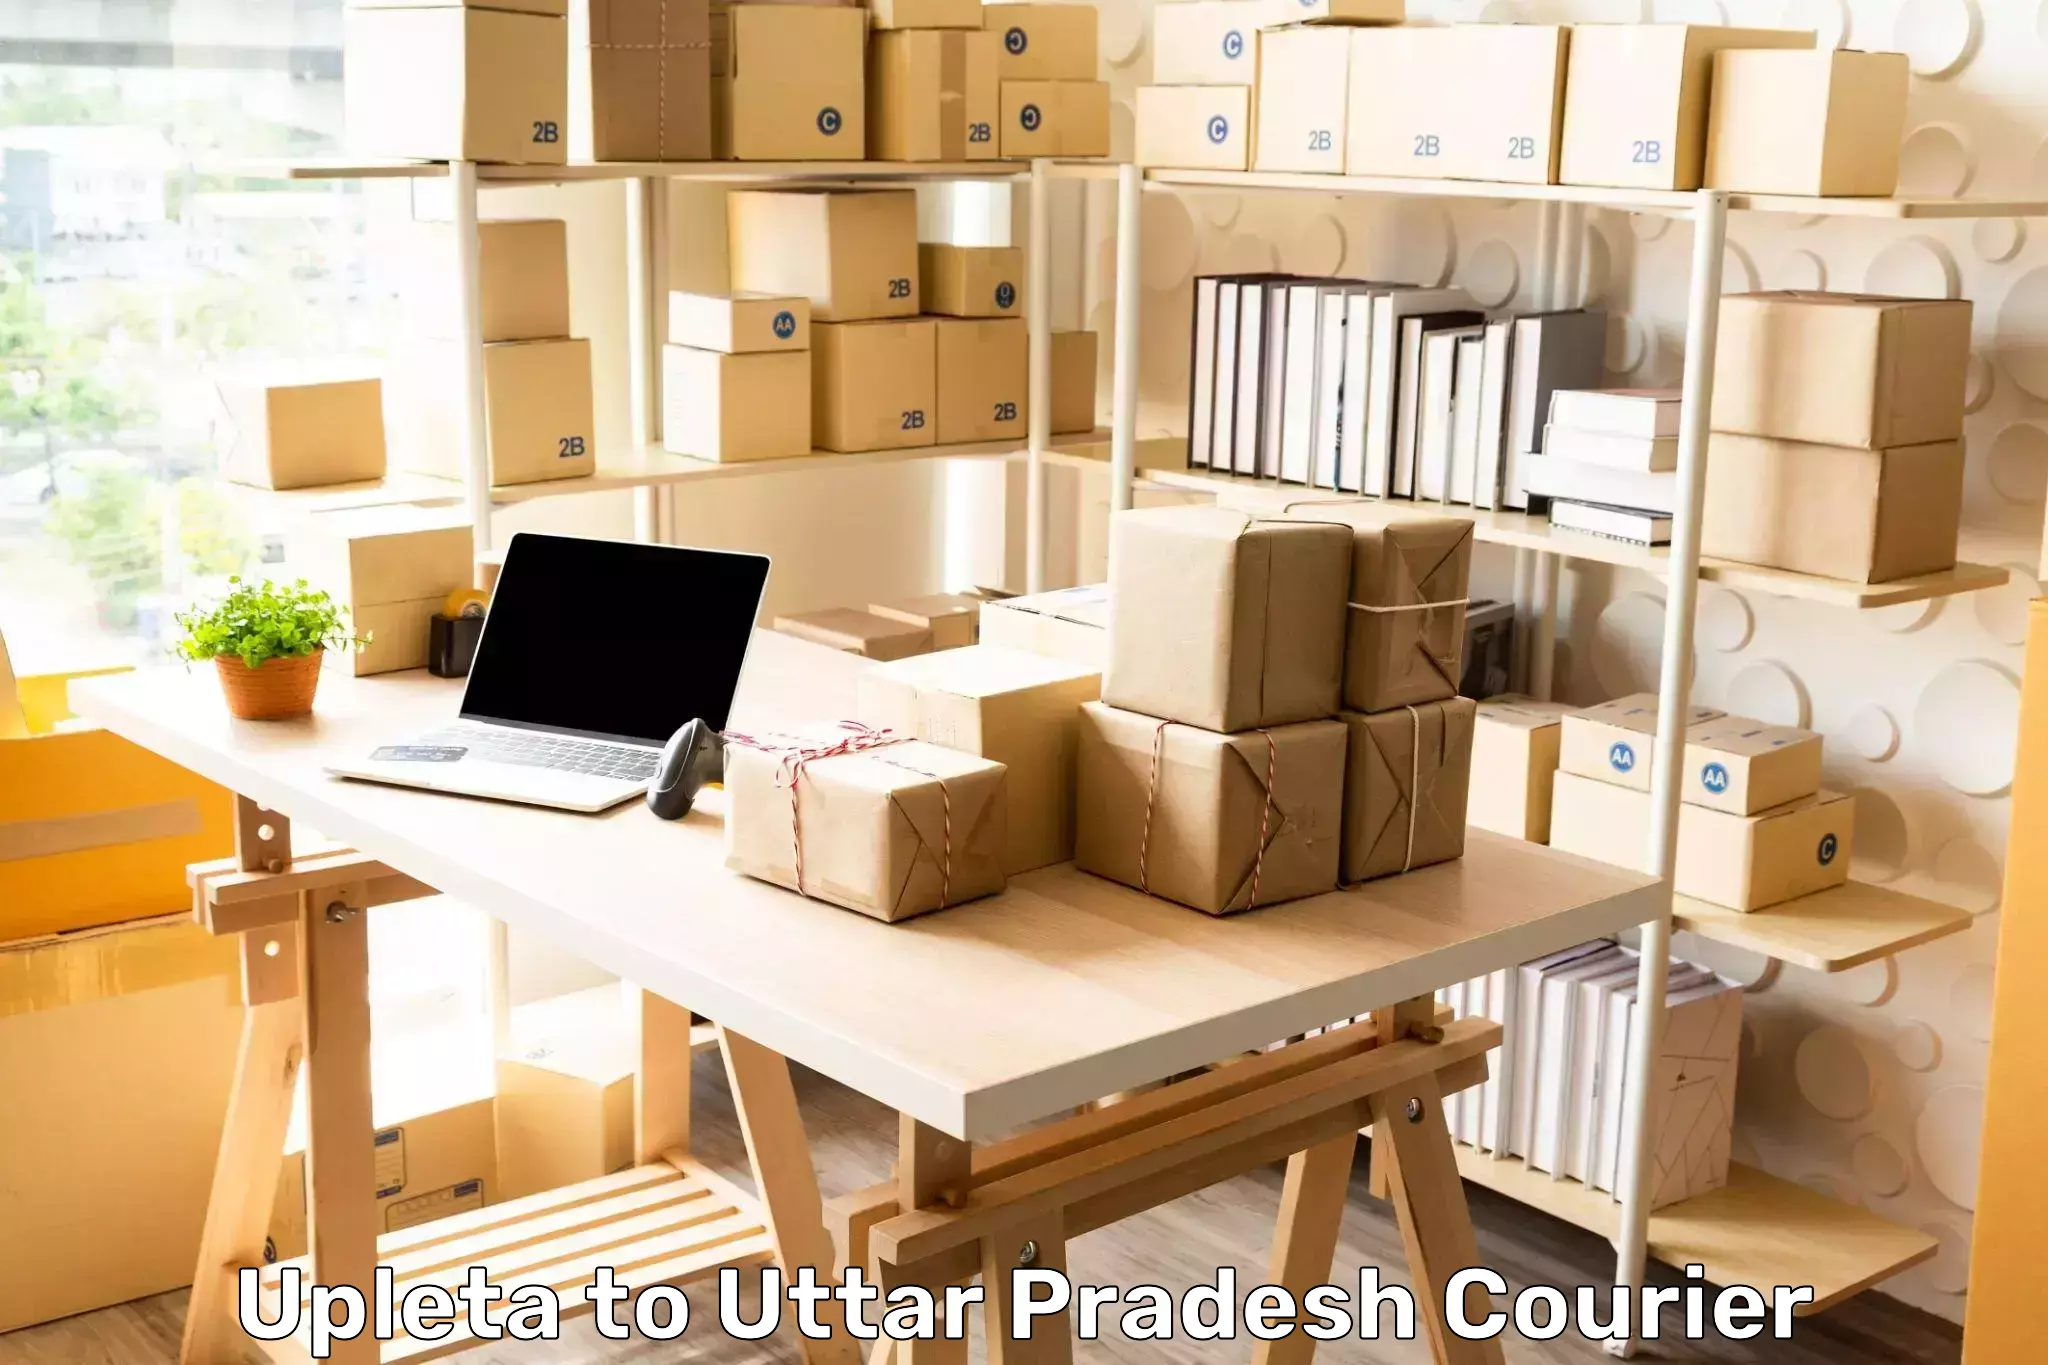 Cargo courier service Upleta to Uttar Pradesh